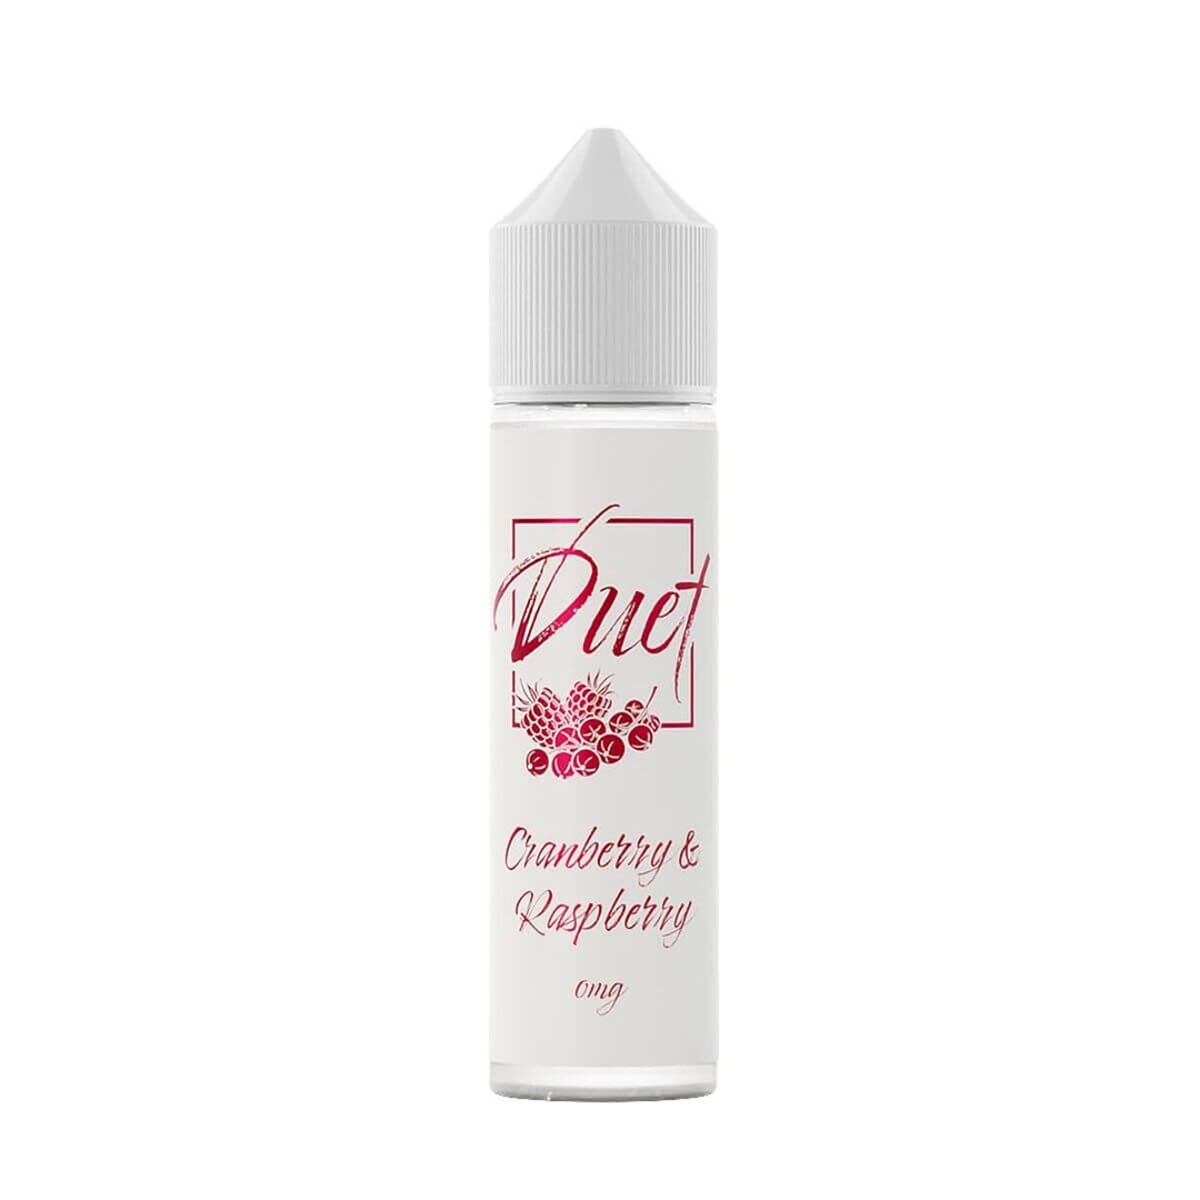 Duet cranberry & raspberry 0mg 50ml shortfill e-liquid available at dispergo vaping uk